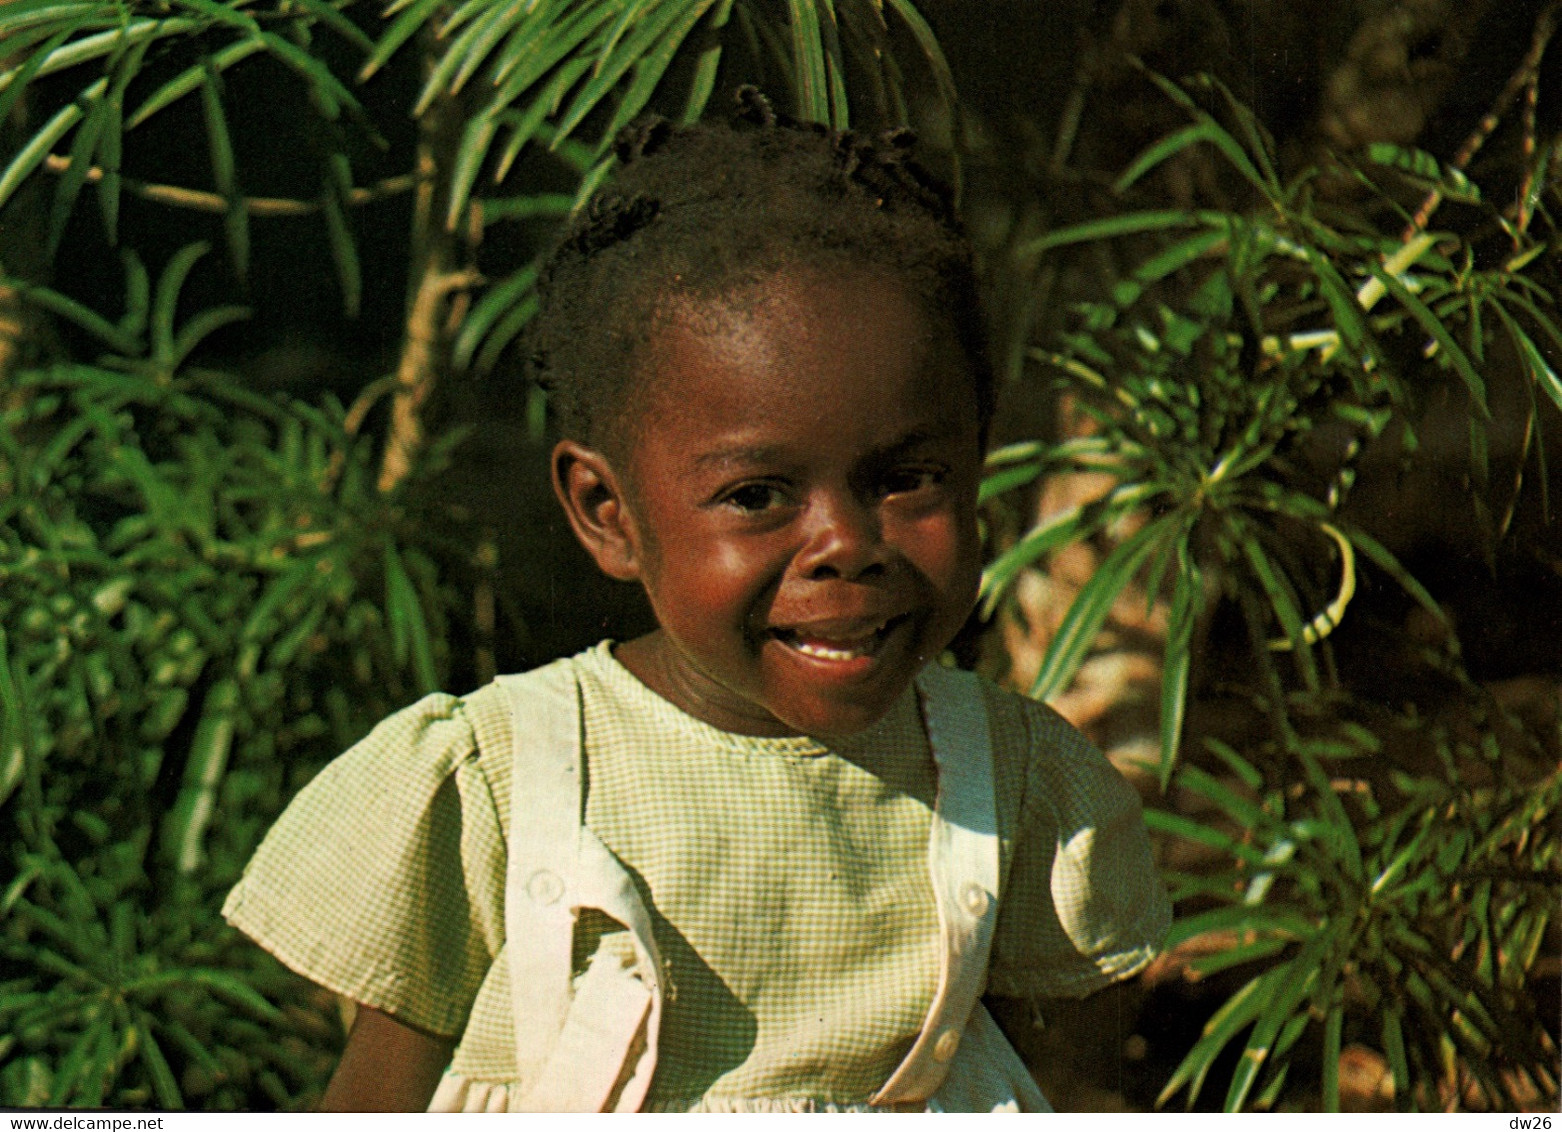 Afrique - Guinea Ecuatorial (Guinée Equatoriale) Sonrisa De Nina En Bata (sourire D'enfant) - África